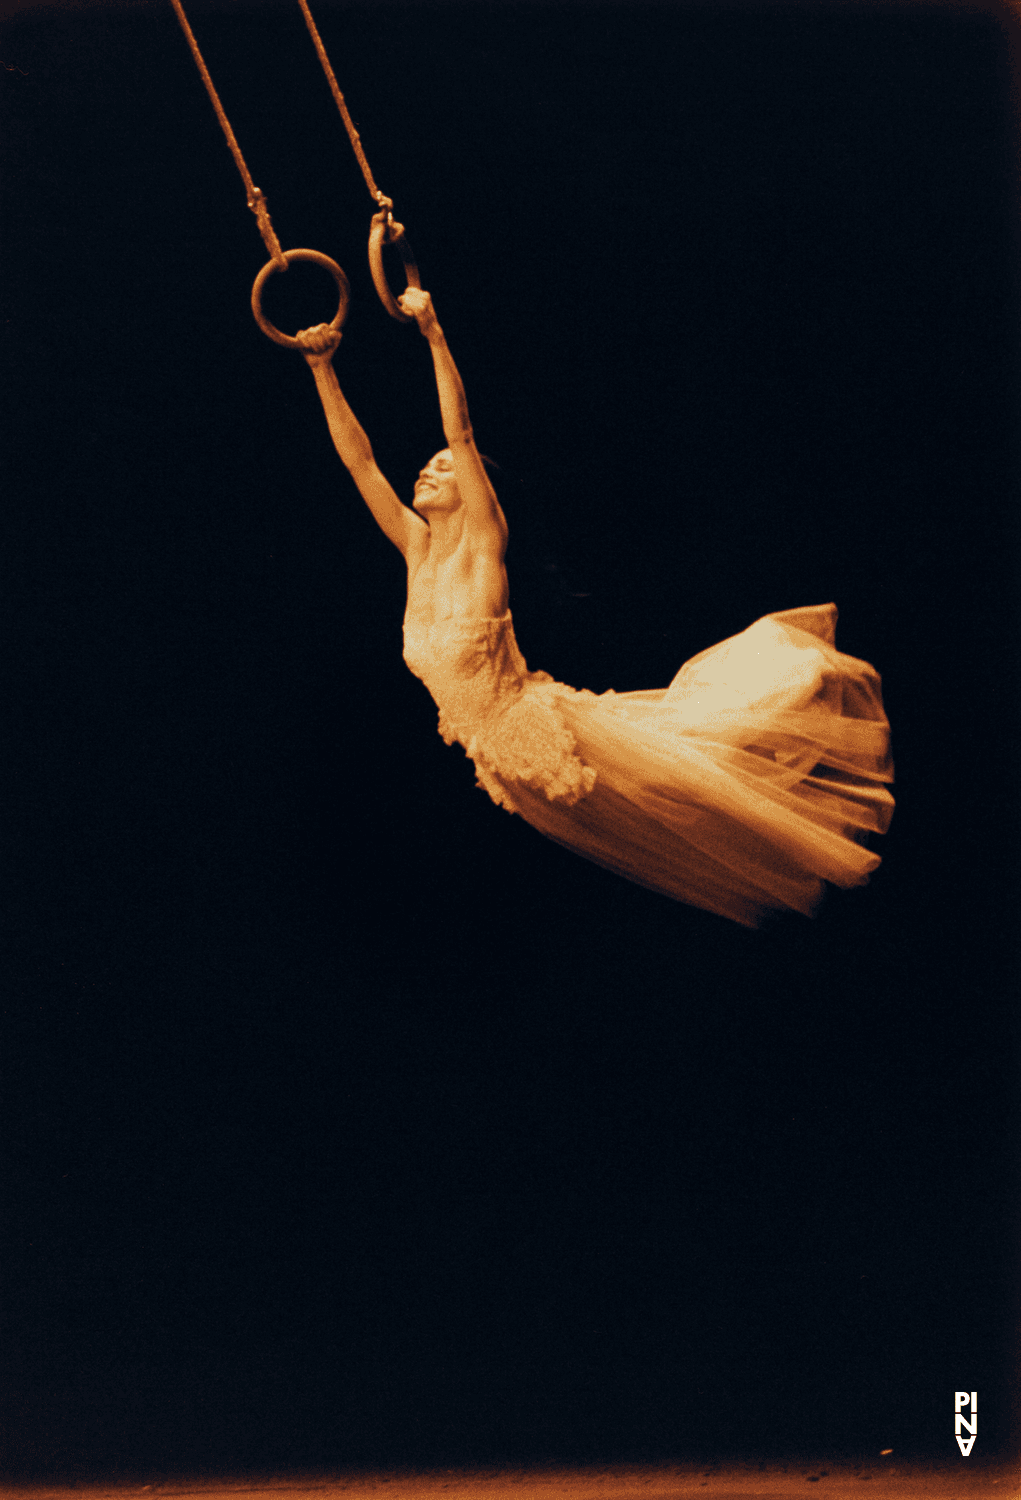 Ruth Amarante in “Viktor” by Pina Bausch